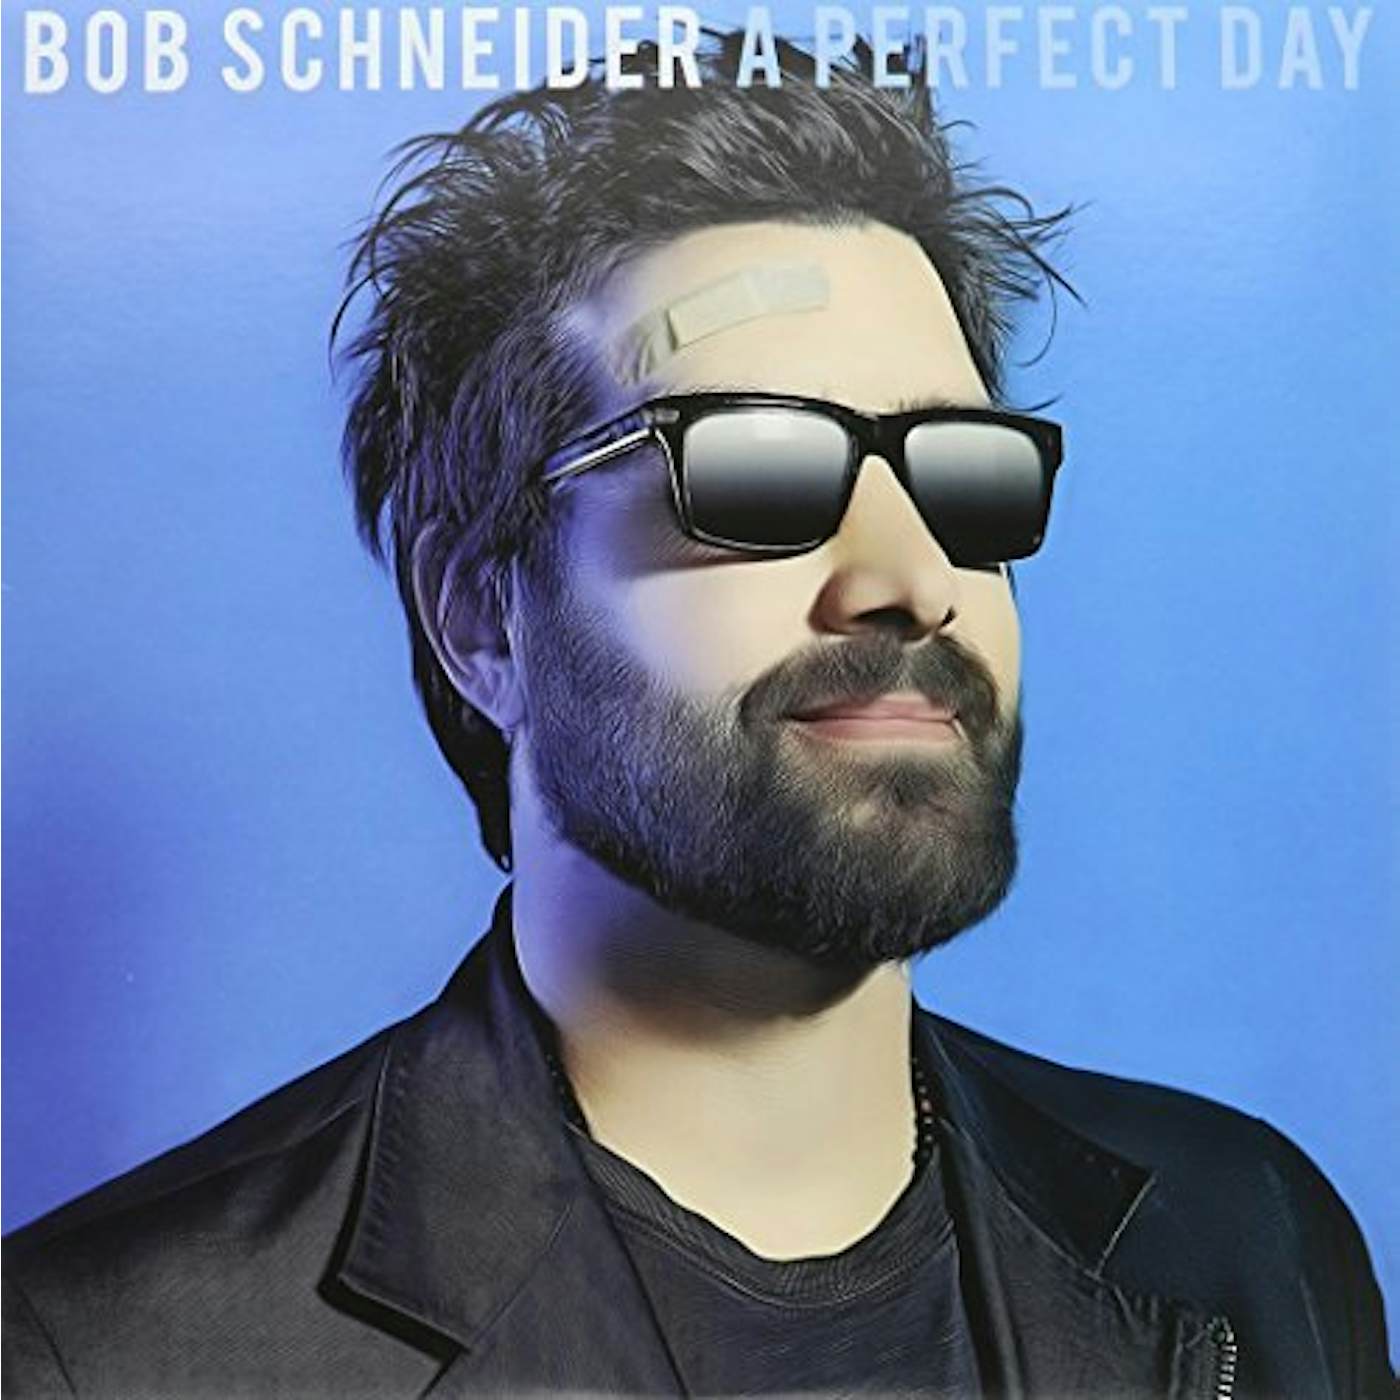 Bob Schneider PERFECT DAY Vinyl Record